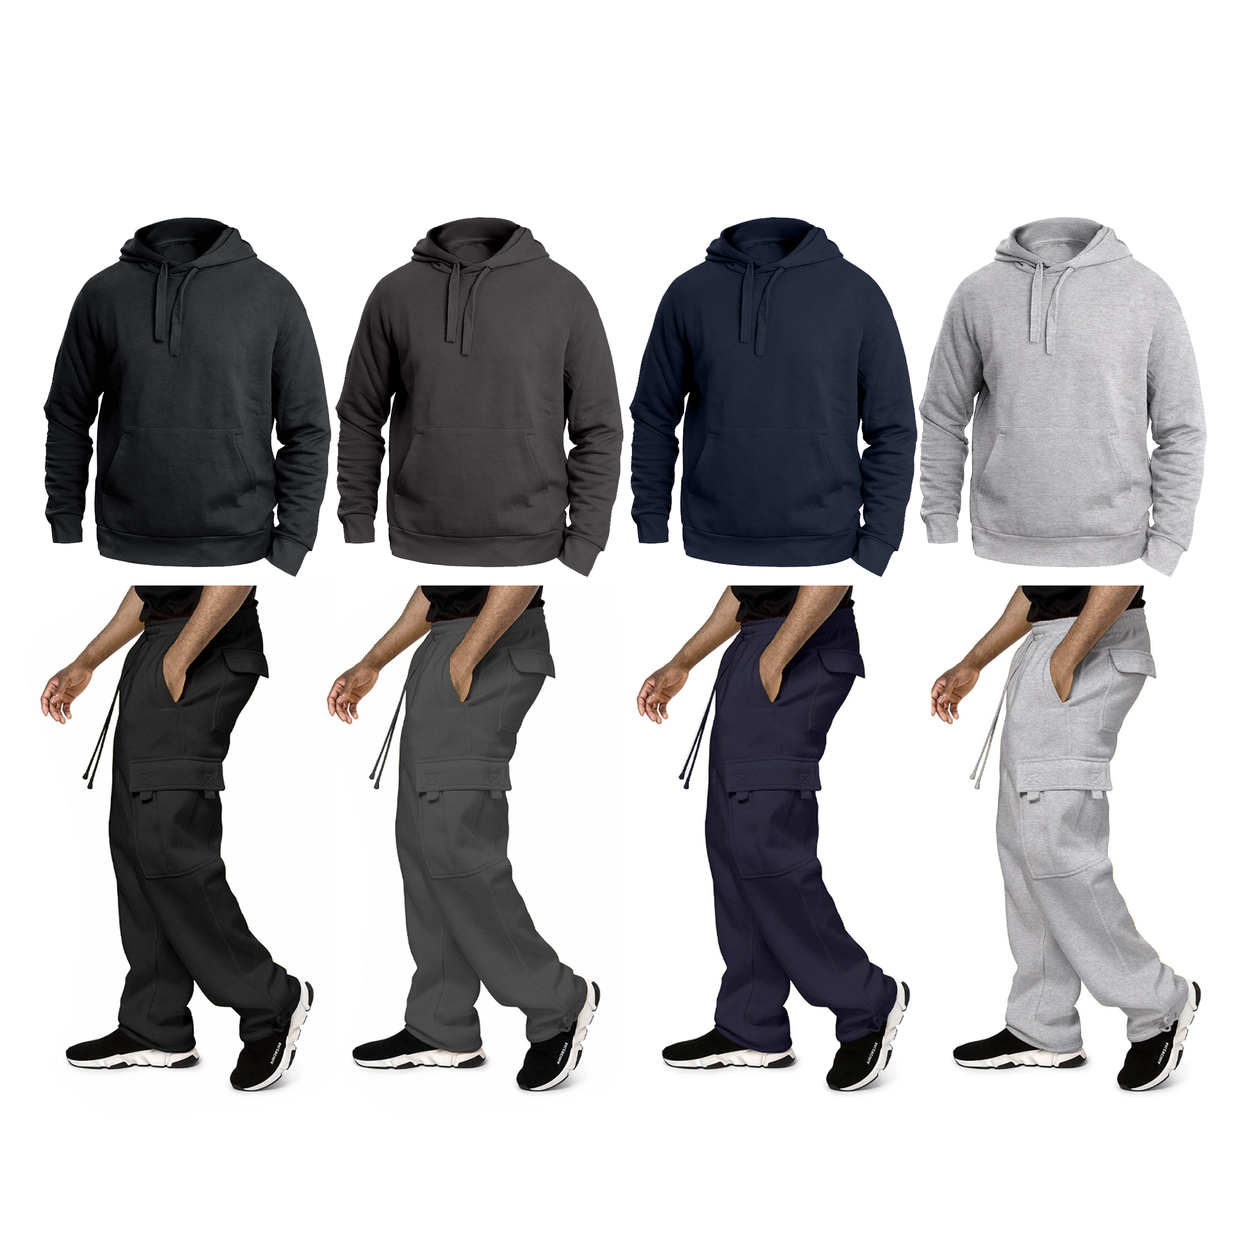 Multi-Pack: Big & Tall Men's Winter Warm Cozy Athletic Fleece Lined Multi-Pocket Cargo Sweatsuit - Grey, 1-pack, Medium